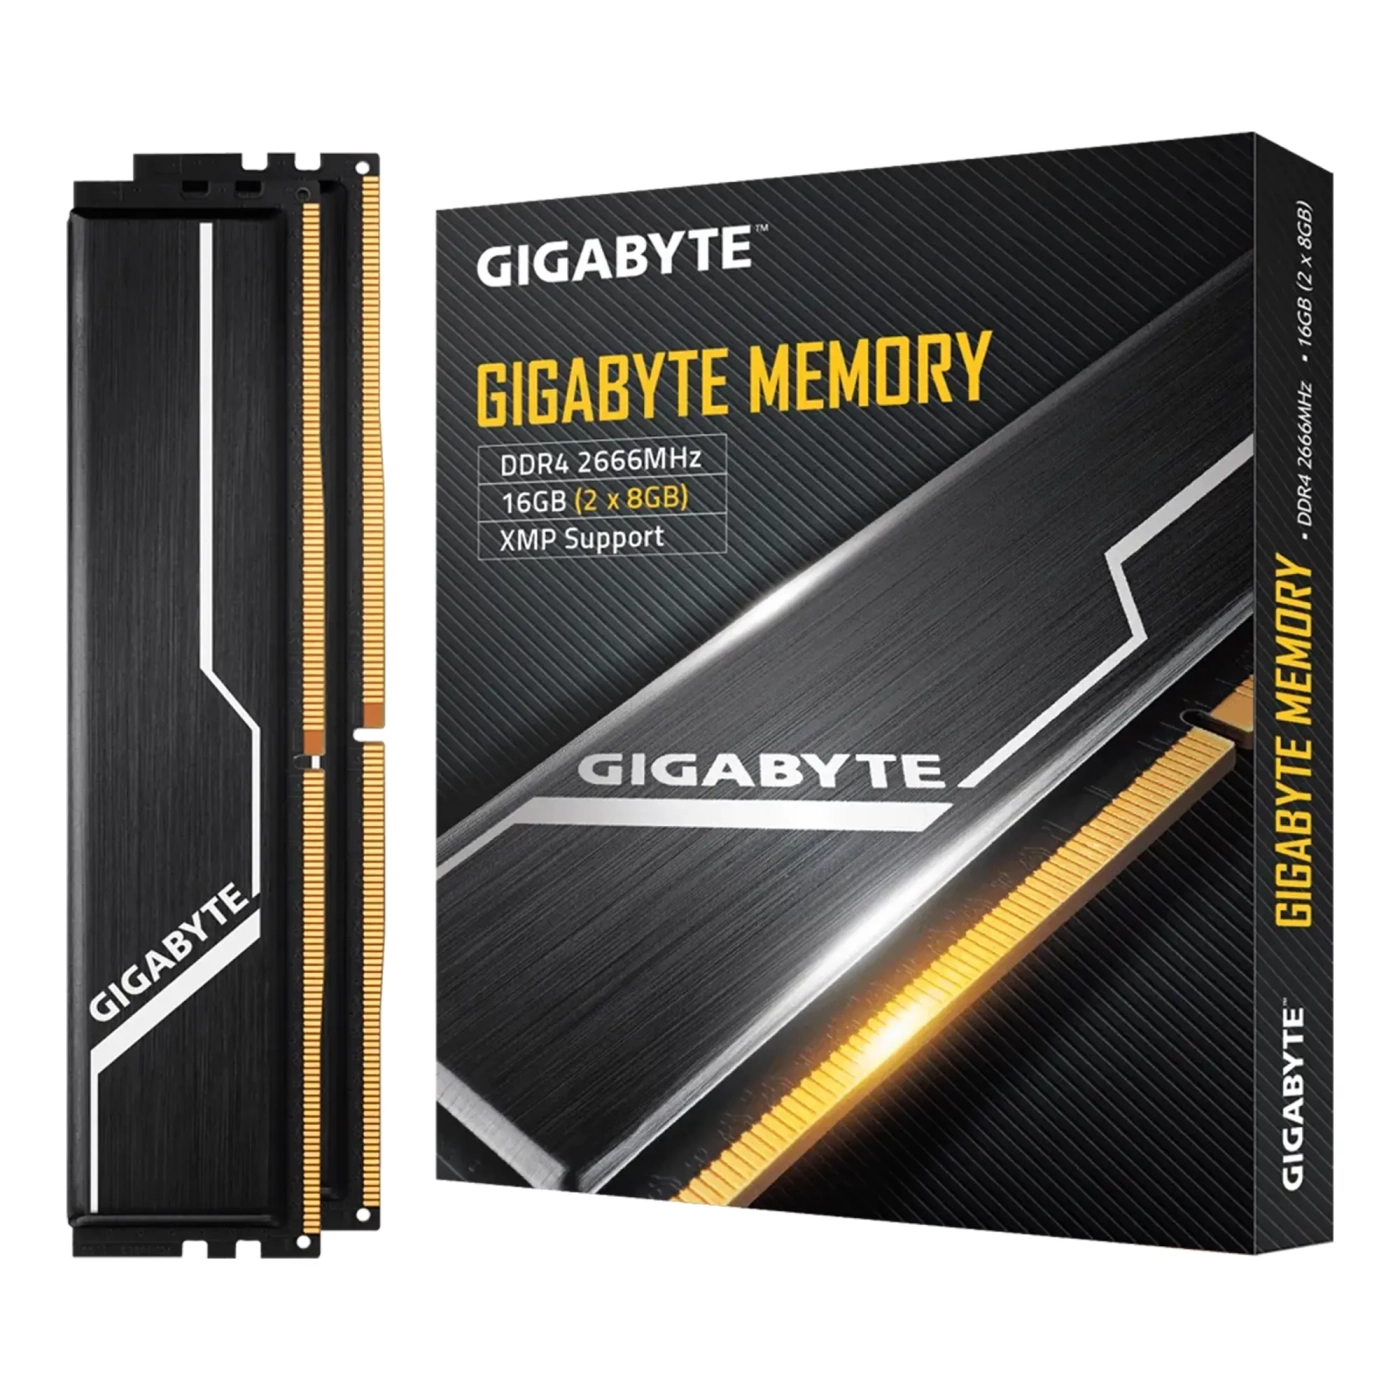 Купить Модуль памяти Gigabyte DDR4-2666 16GB (2x8GB) (GP-GR26C16S8K2HU416) - фото 1